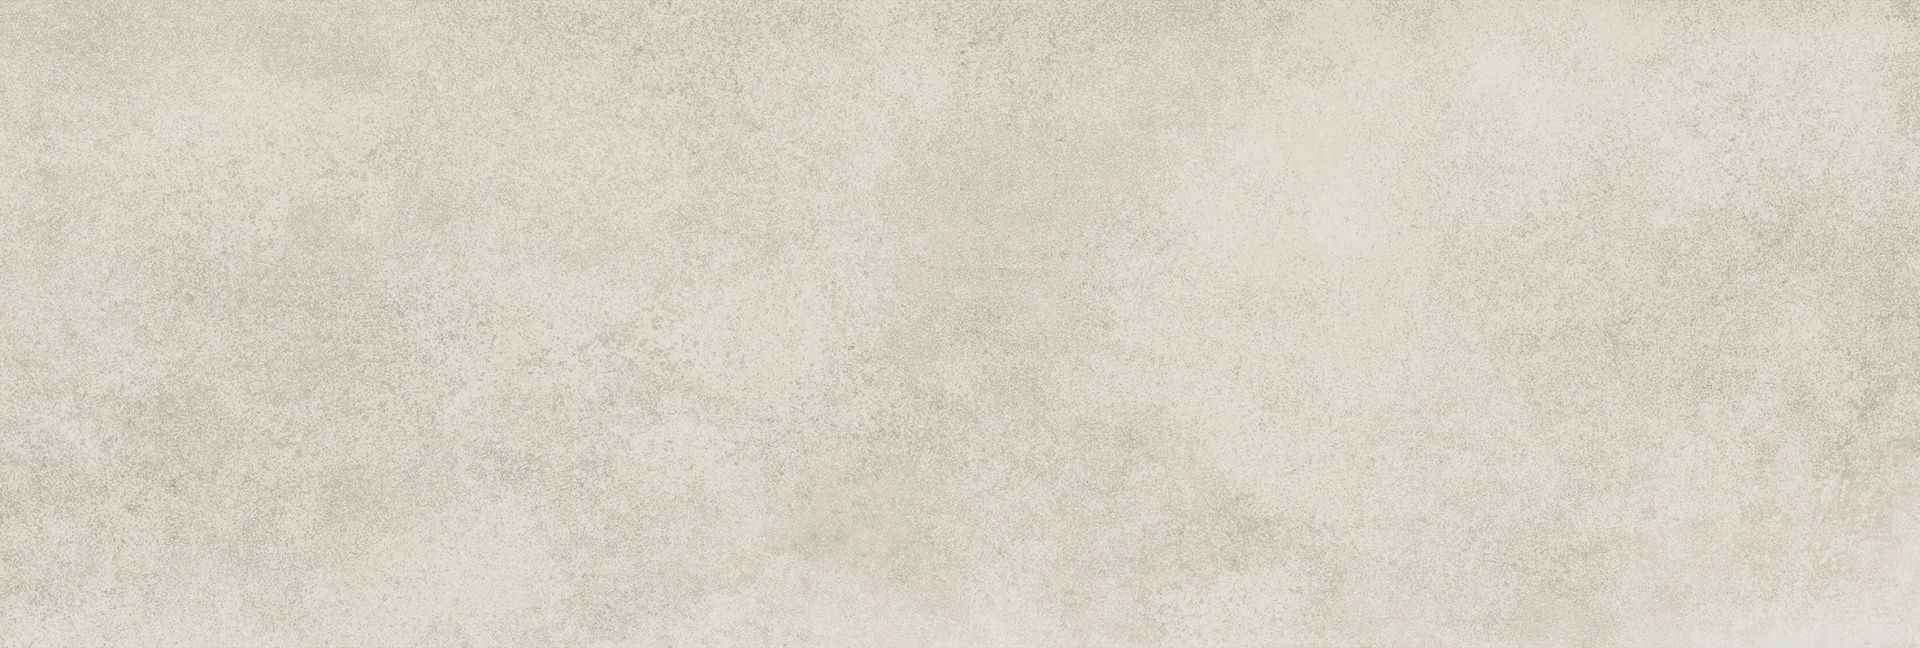 Керамическая плитка MATERIKA WHITE для стен 25x75